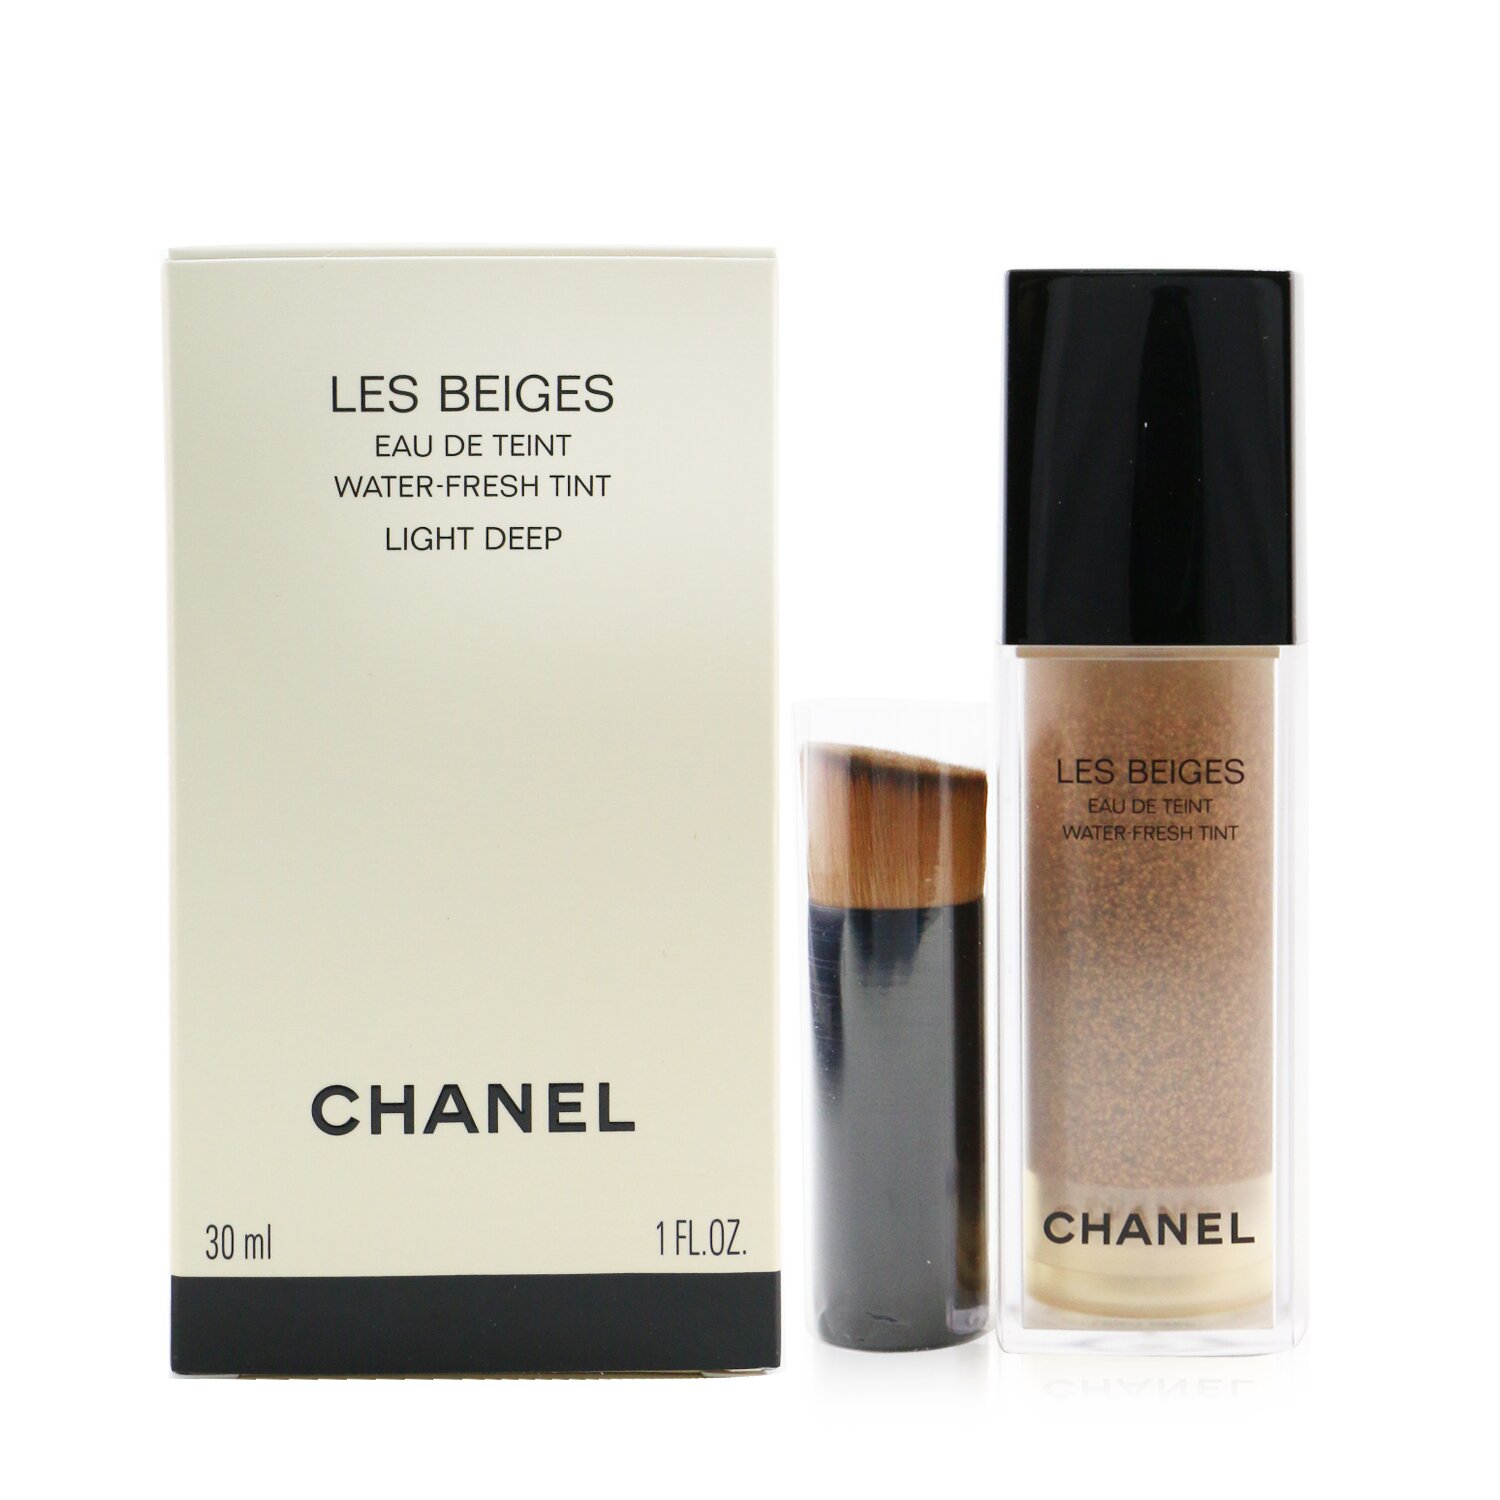 Chanel Les Beiges Eau de Teint Water Fresh Tint 30 ml Light Deep